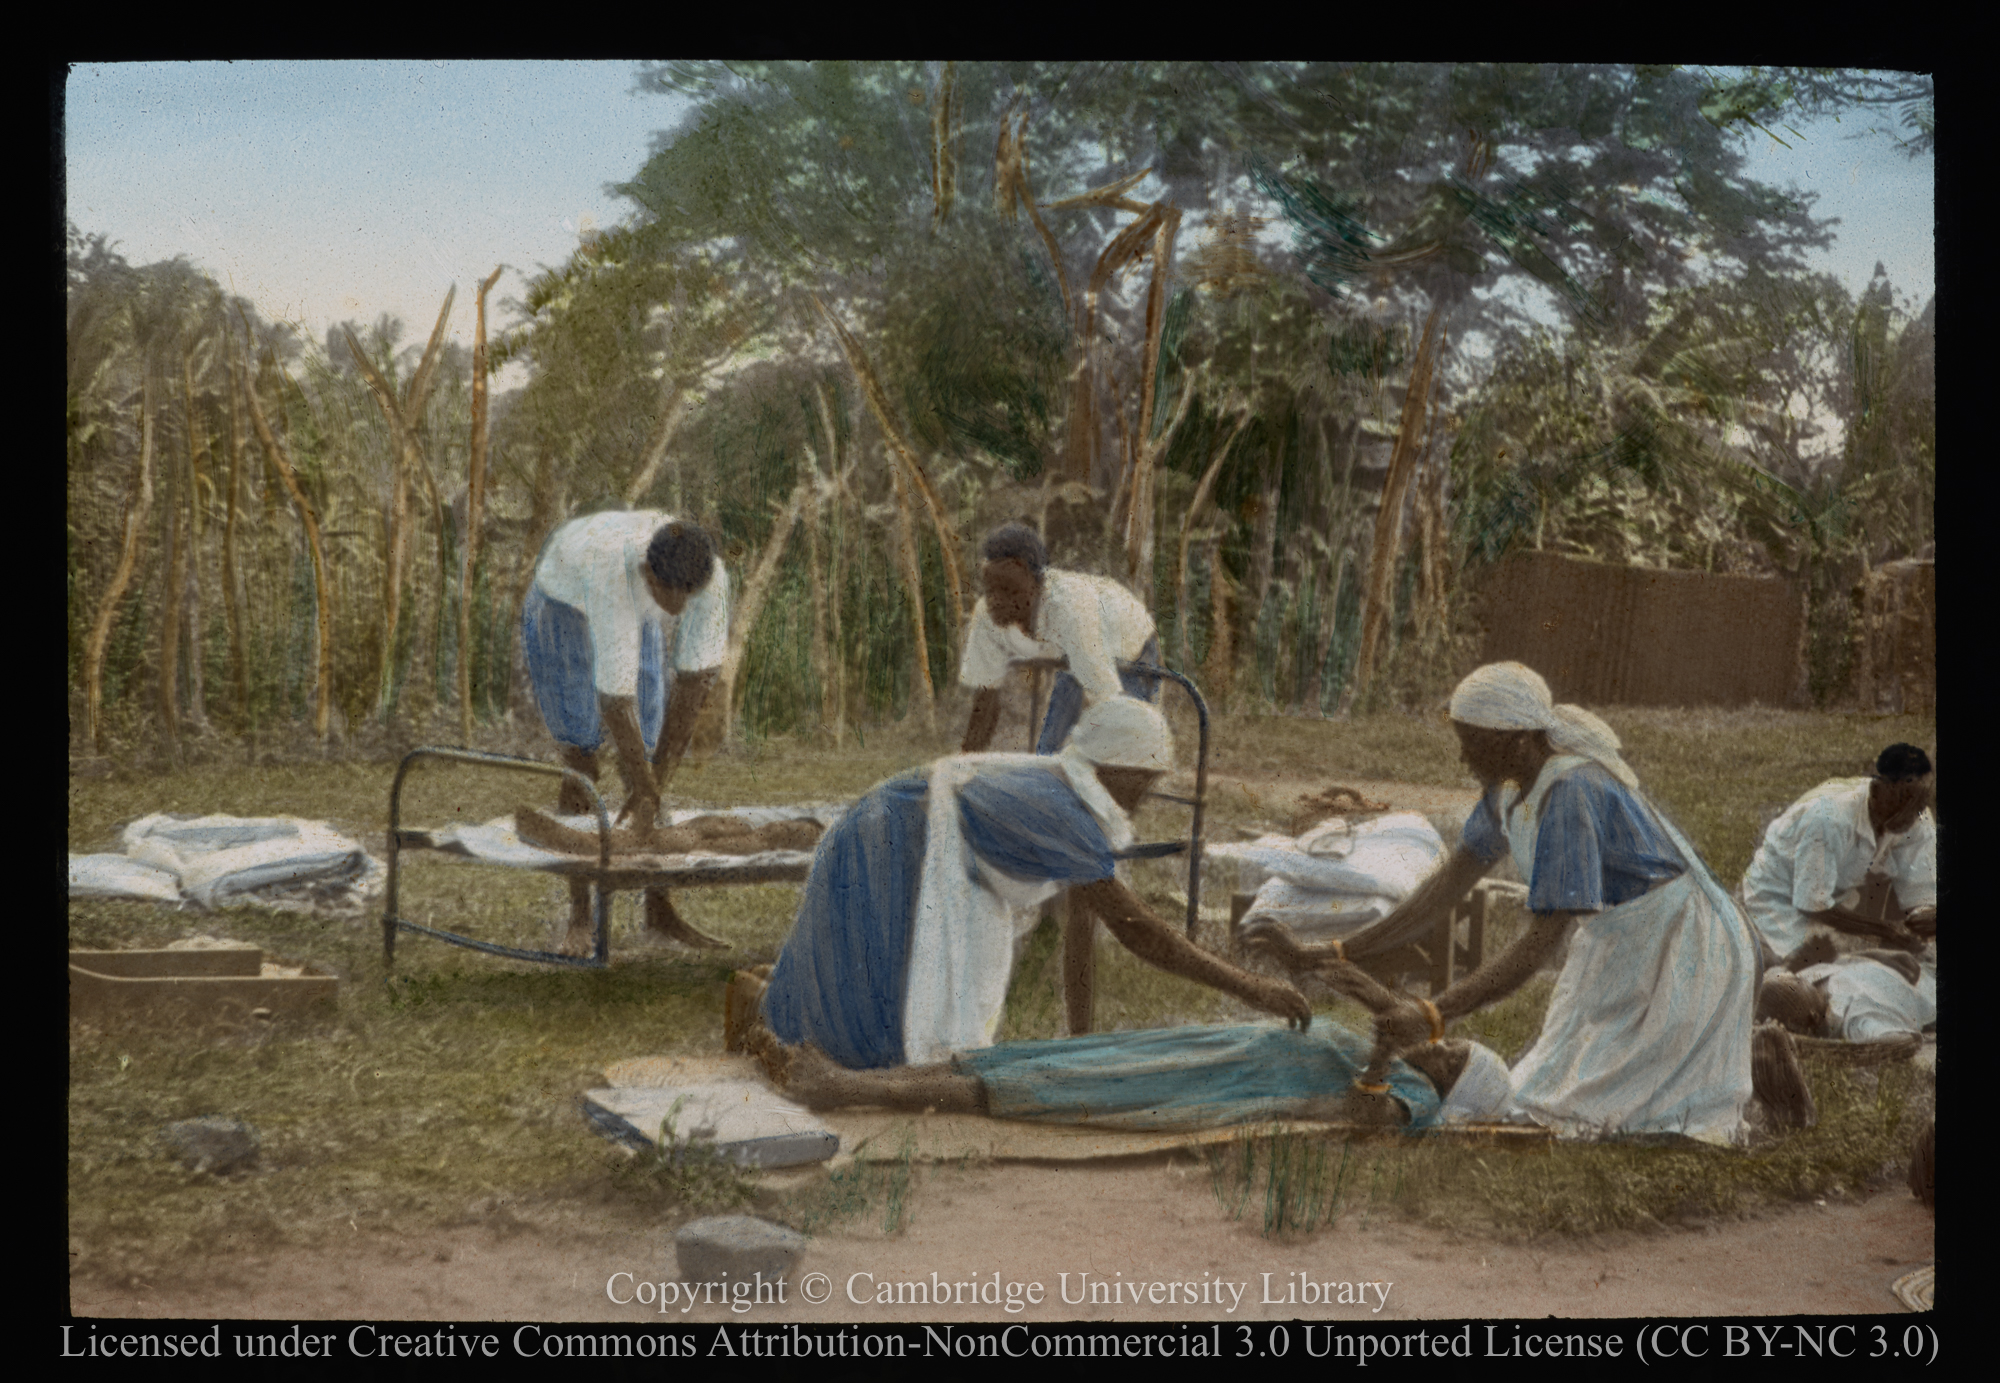 Kaloleni: first aid demonstration, 1905 - 1948